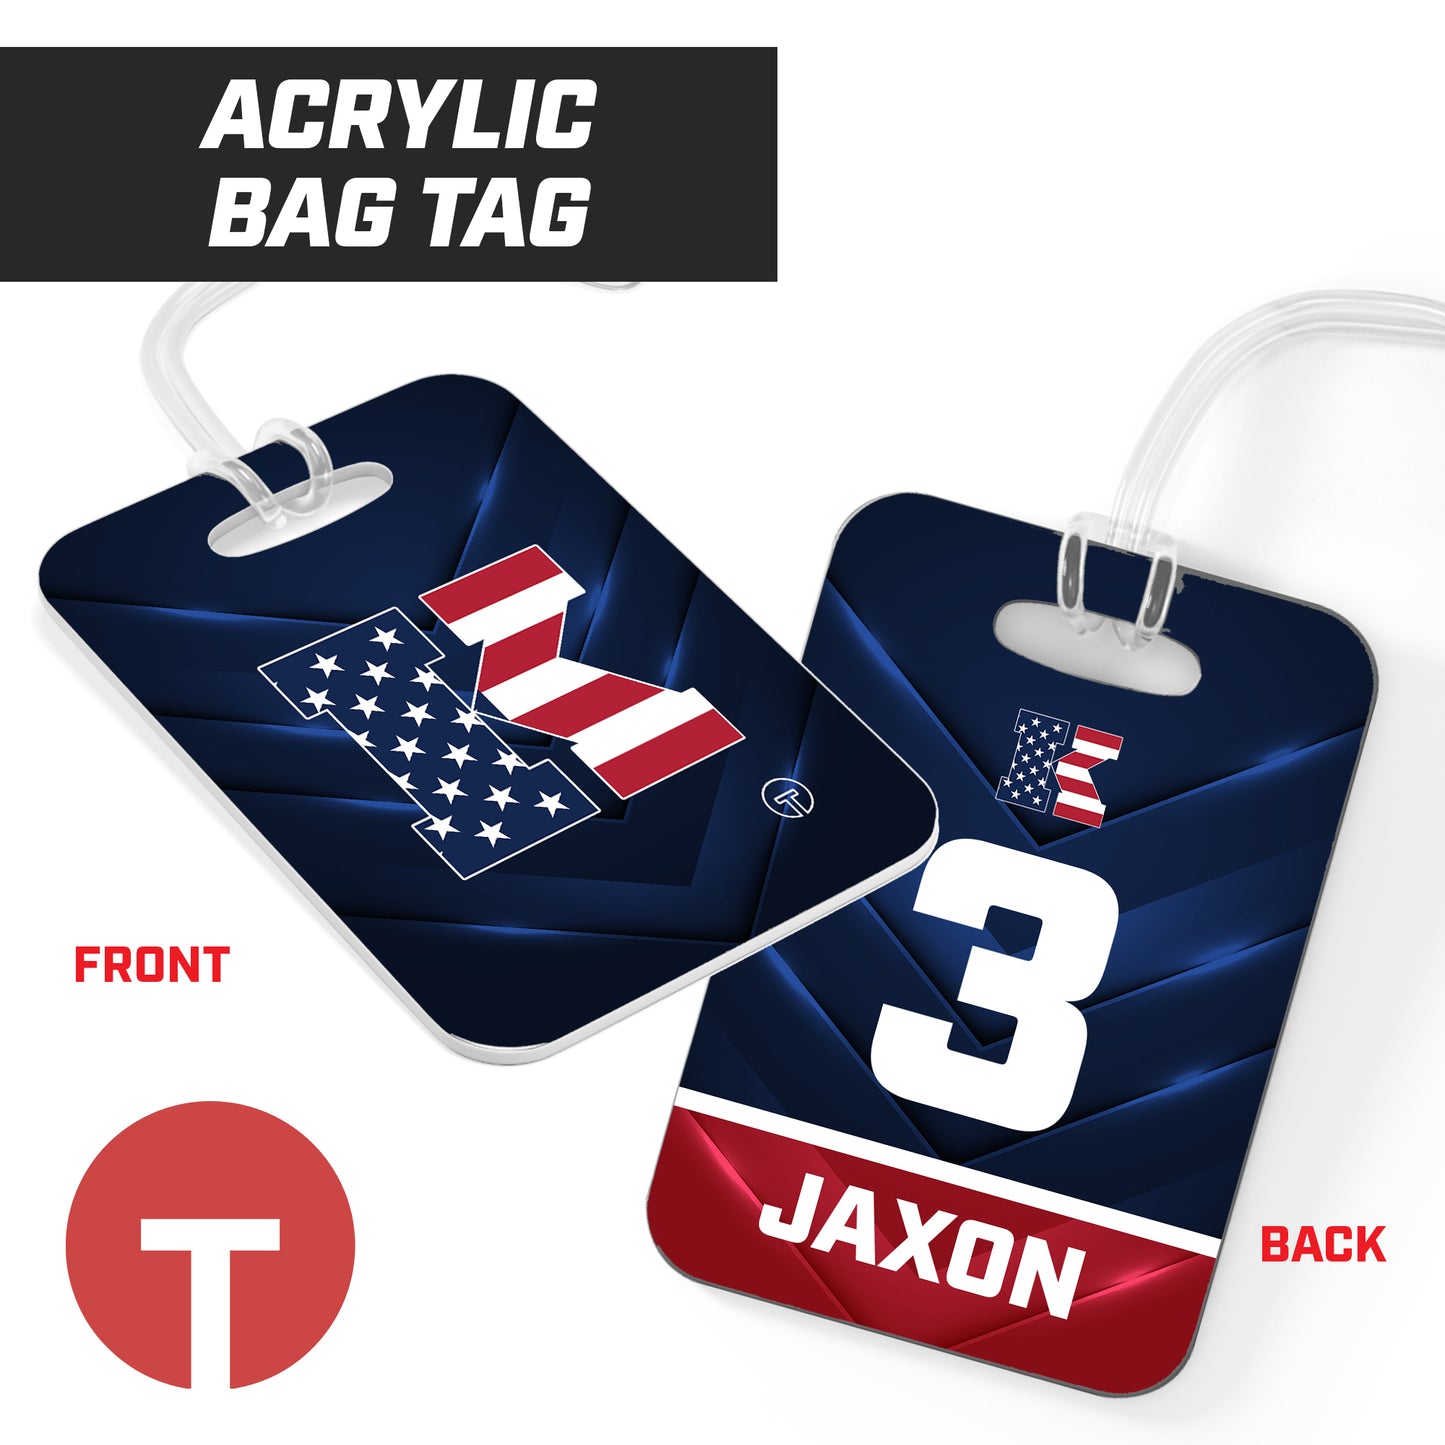 Keystone - Hard Acrylic Bag Tag